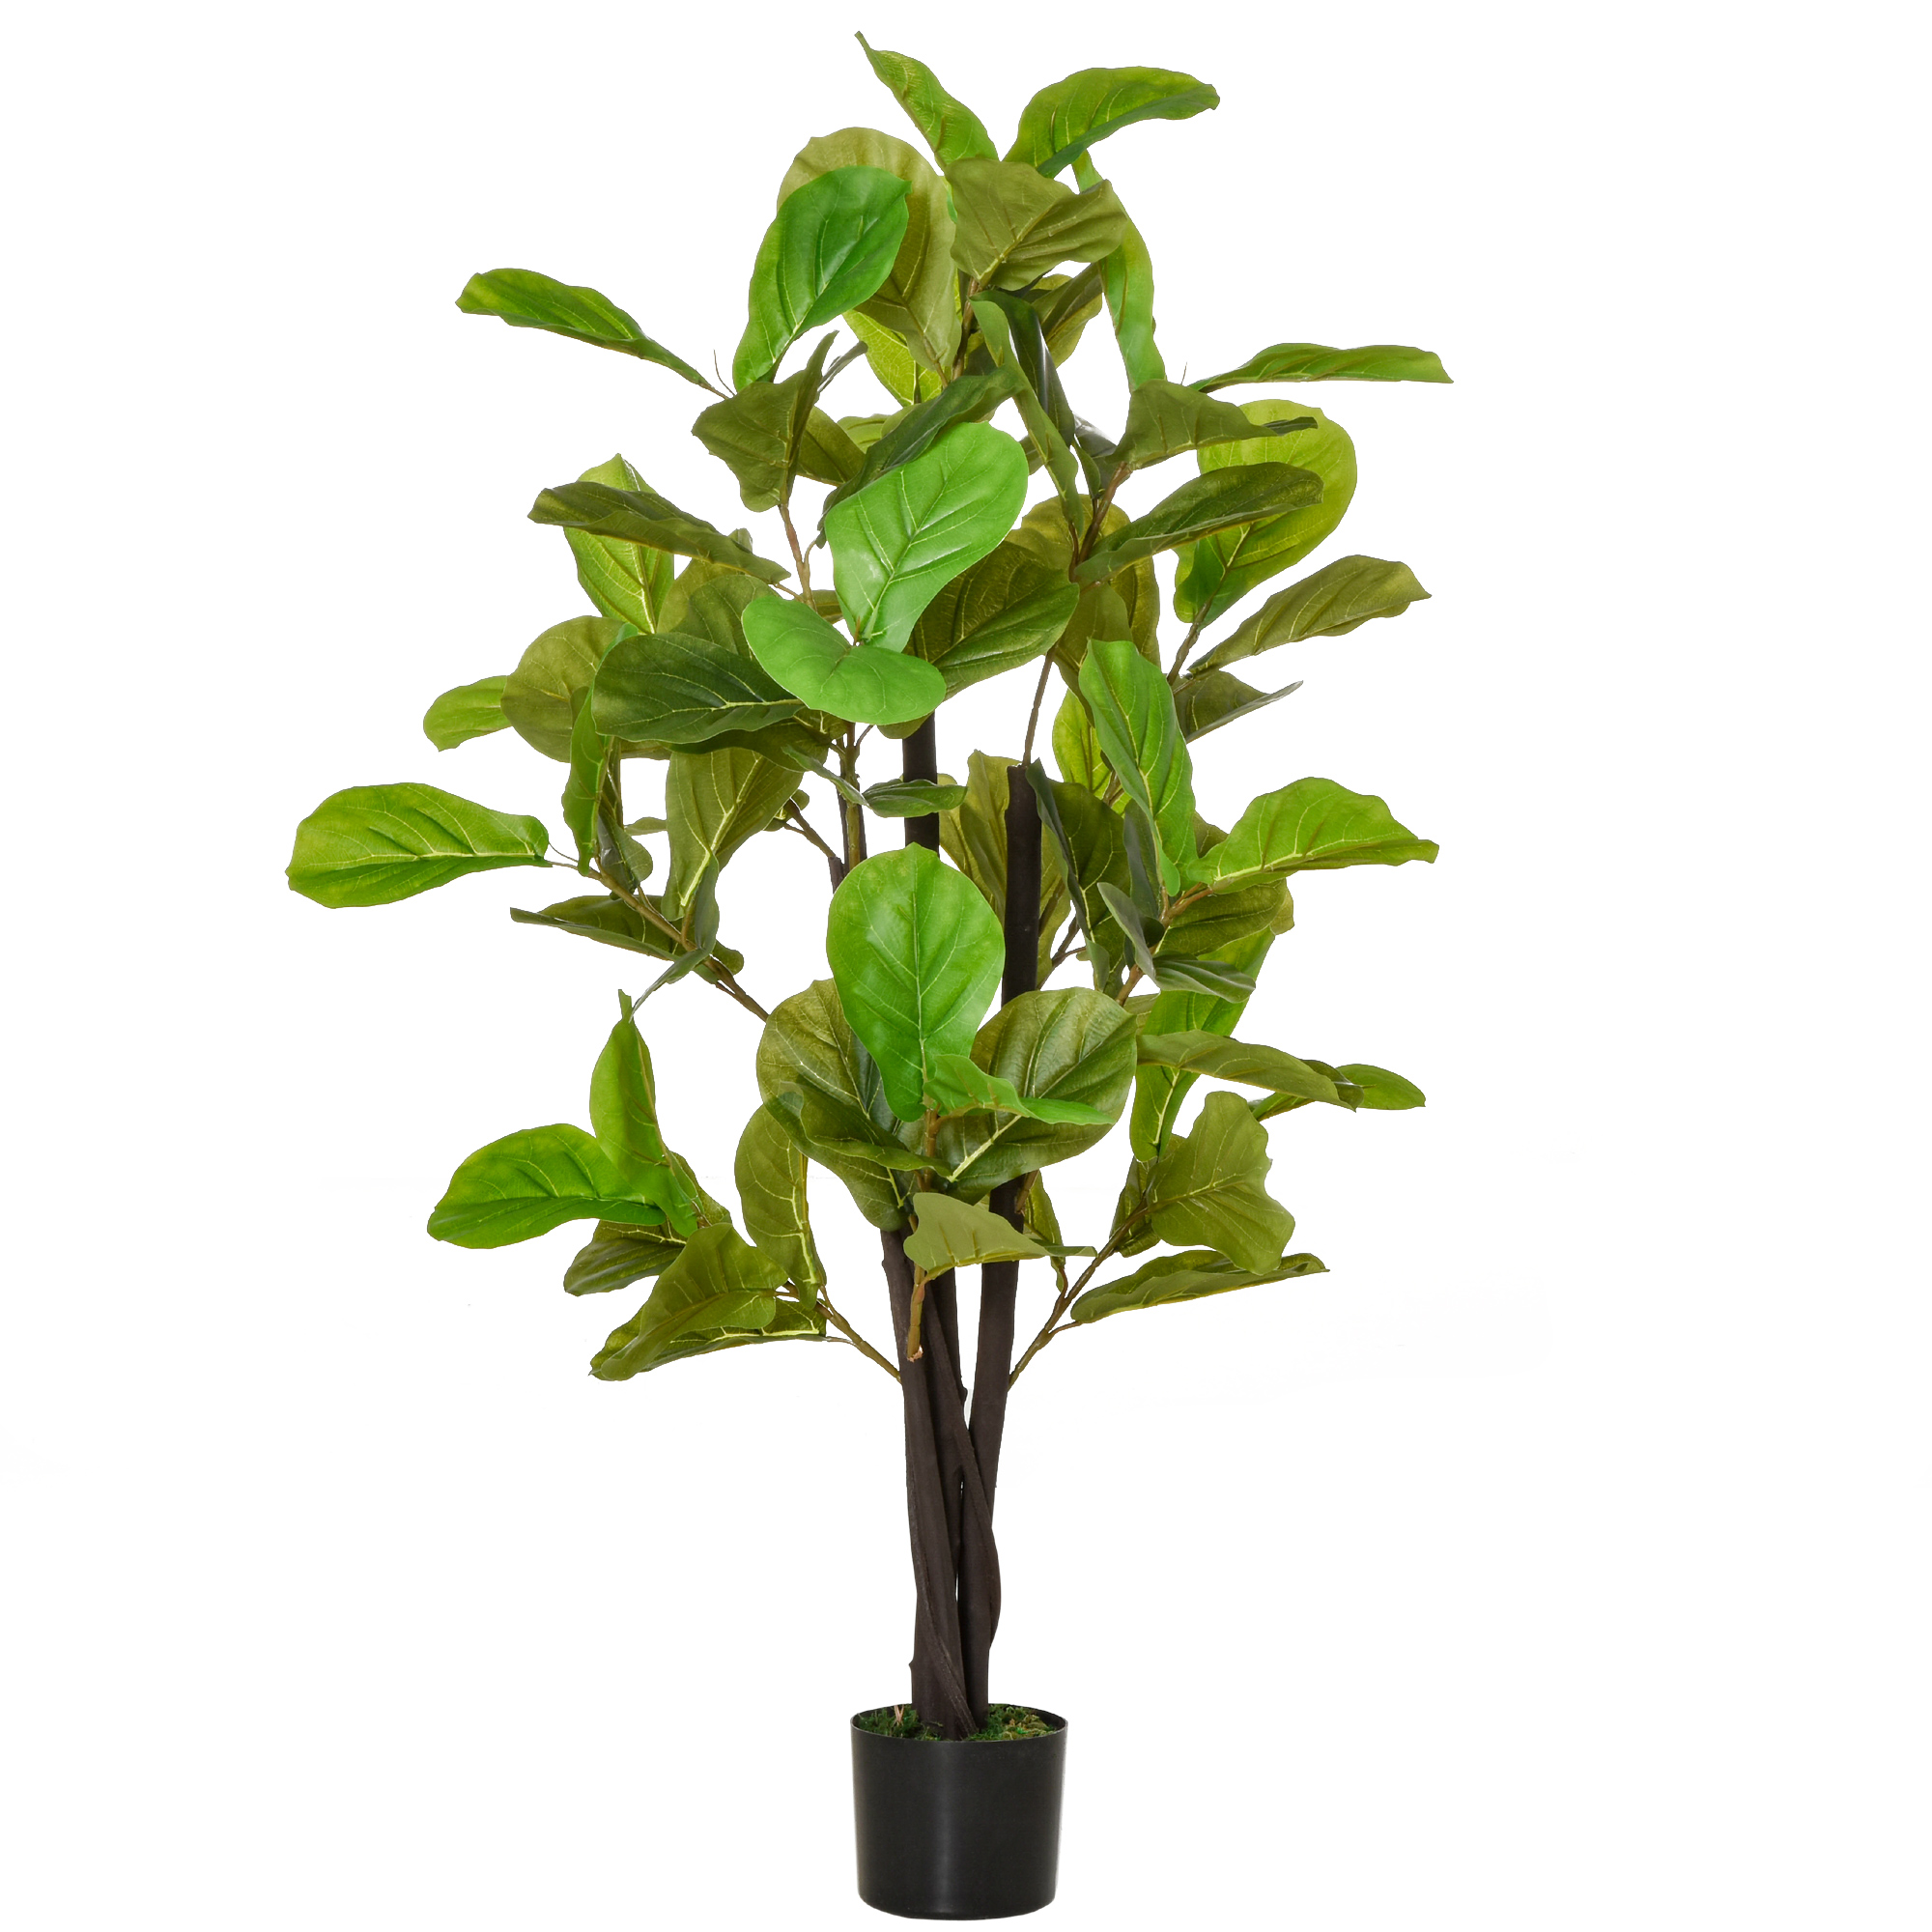 HOMCOM Τεχνητό Ficus 130cm για εσωτερικούς και εξωτερικούς χώρους, ρεαλιστικό τεχνητό φυτό με 78 φύλλα